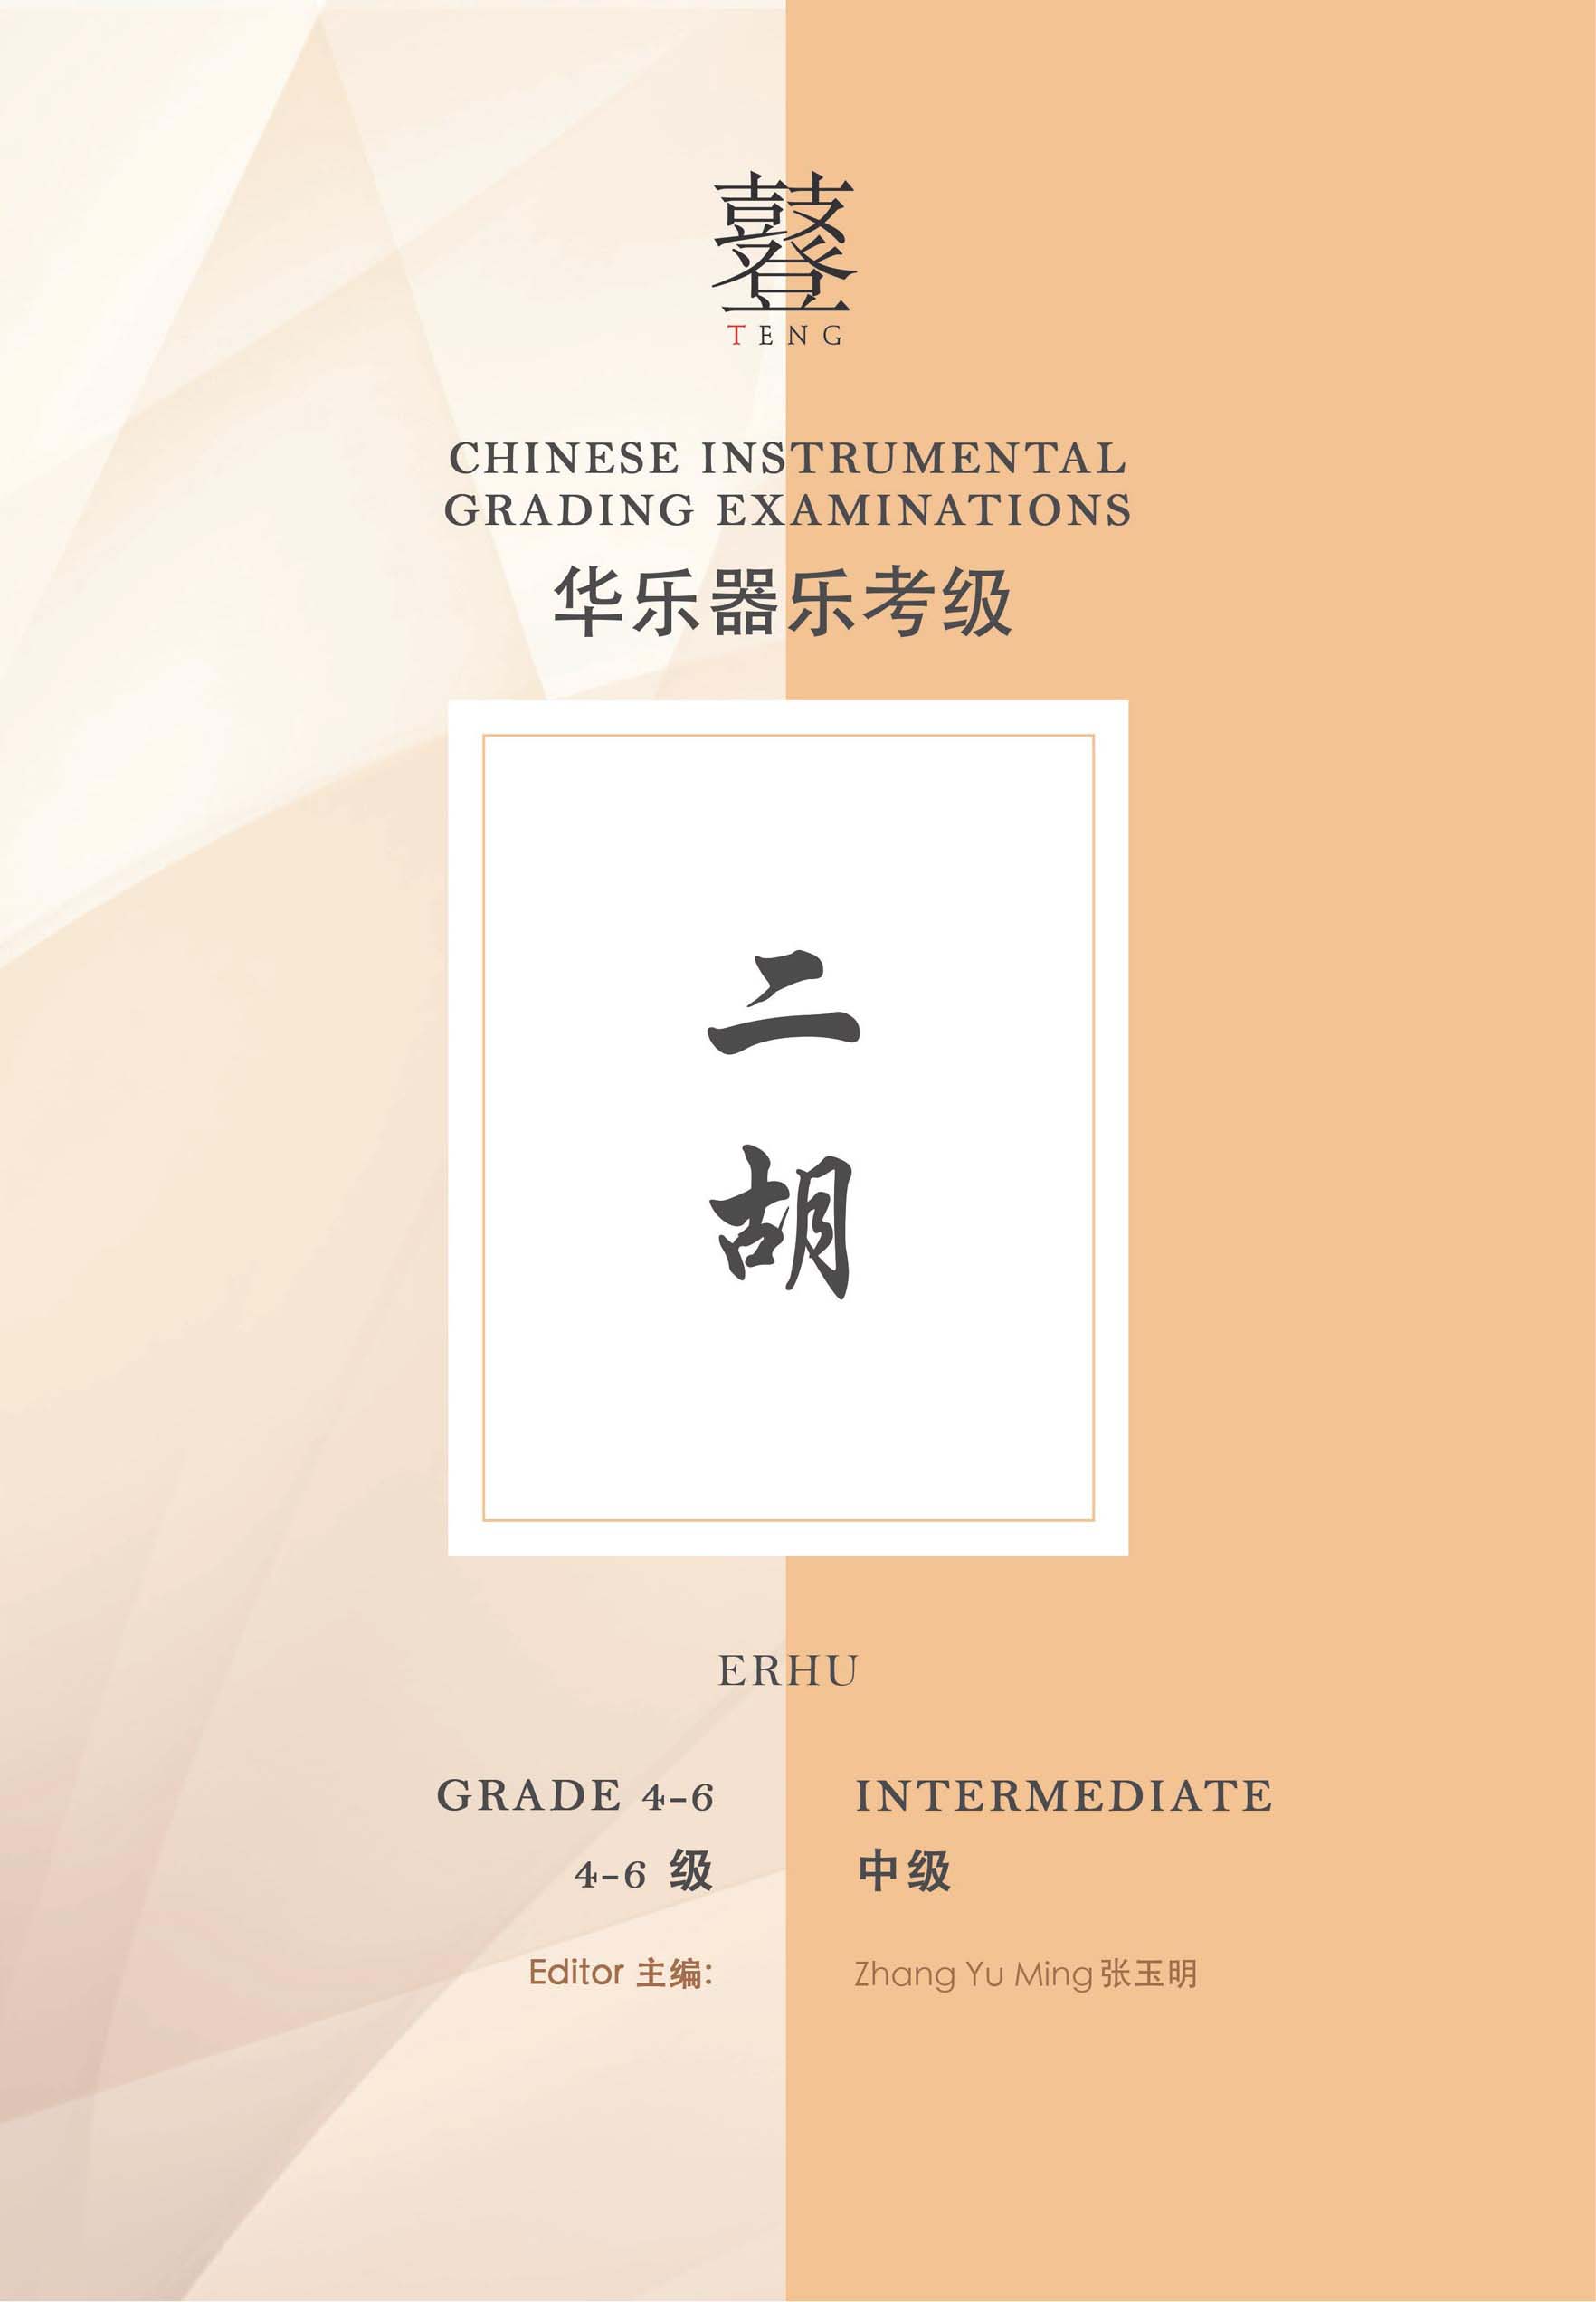 Erhu Grading Examination Book by Teng (Intermediate Grade 4-6) featured photo